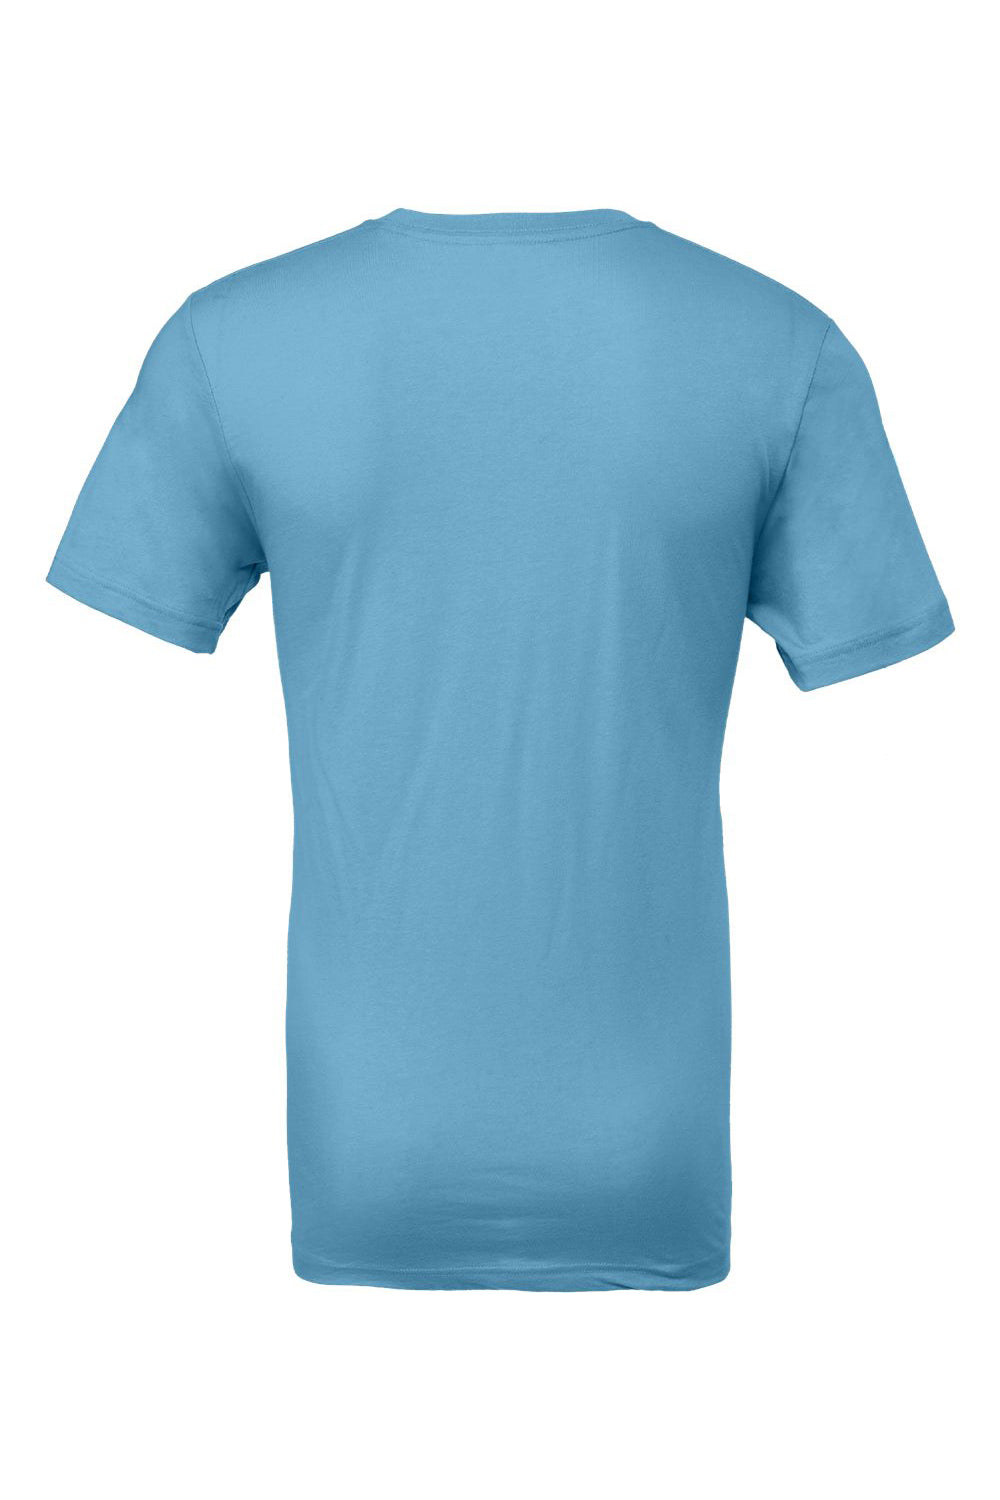 Bella + Canvas BC3001/3001C Mens Jersey Short Sleeve Crewneck T-Shirt Ocean Blue Flat Back